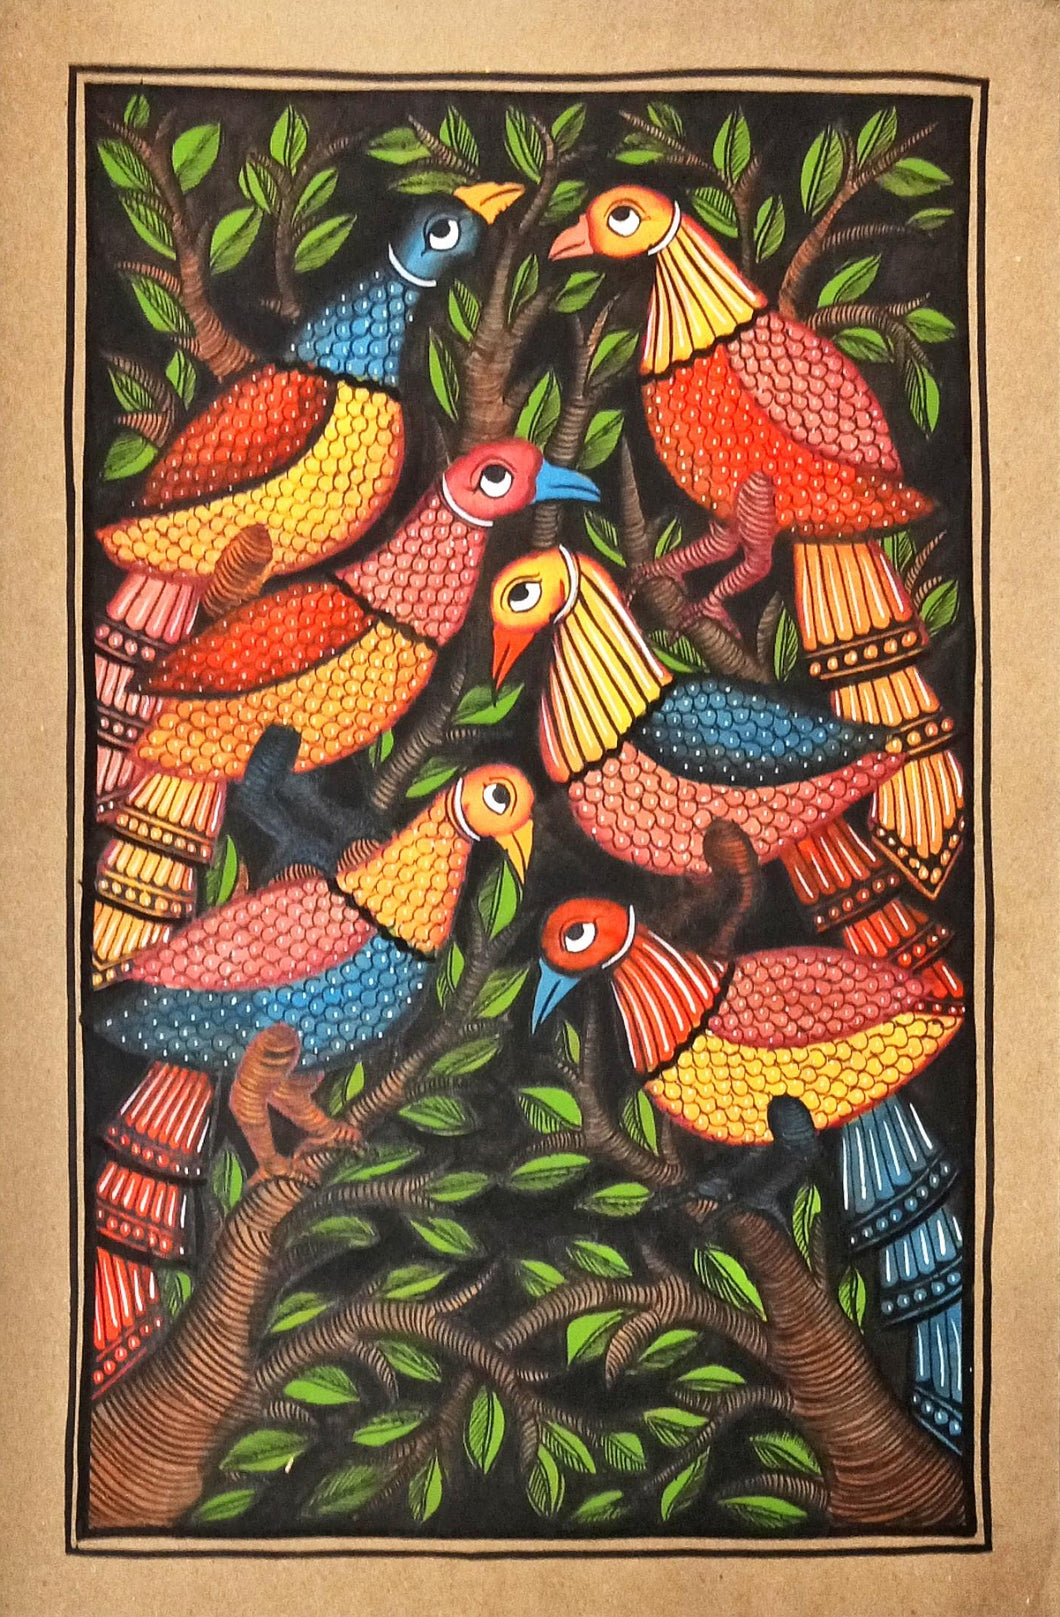 Birds of the Night : Midnapore patachitra painting by Layala Chitrakar